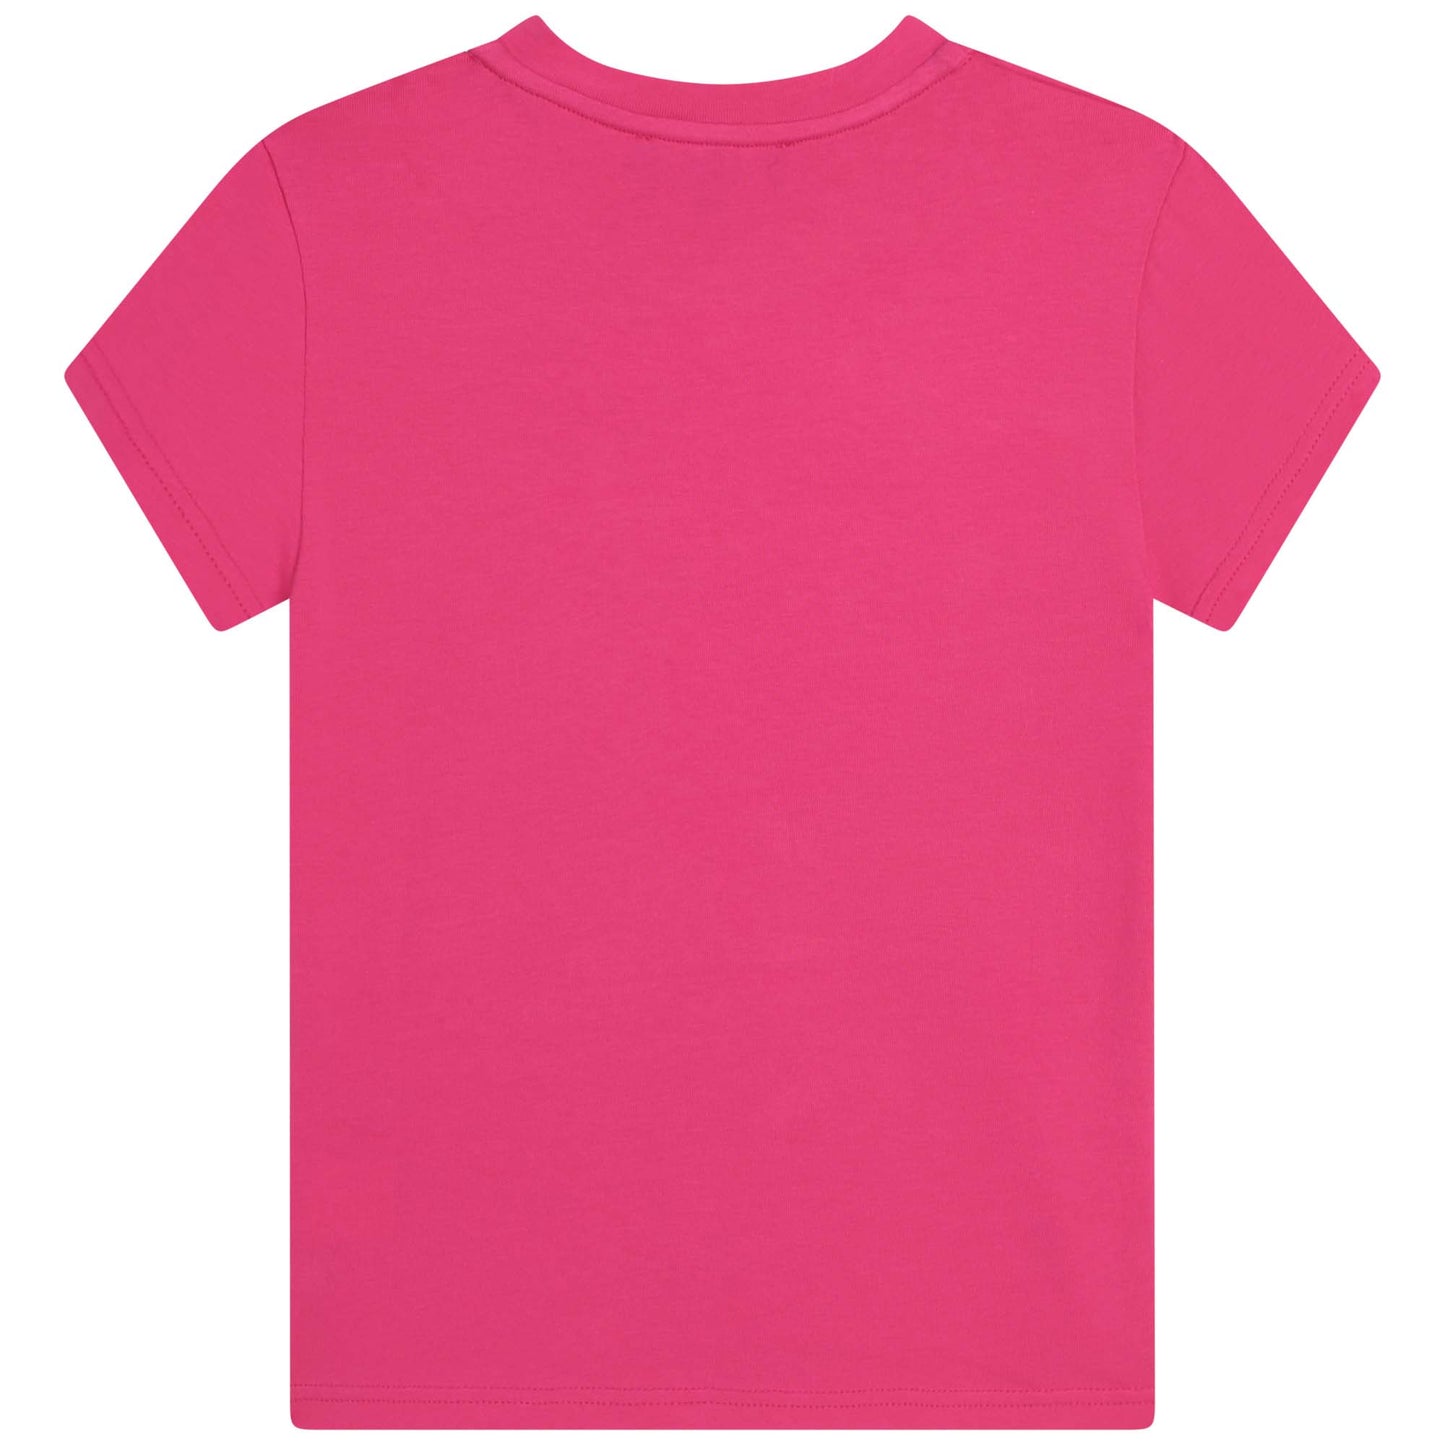 DKNY Girl's Raspberry Logo T-Shirt